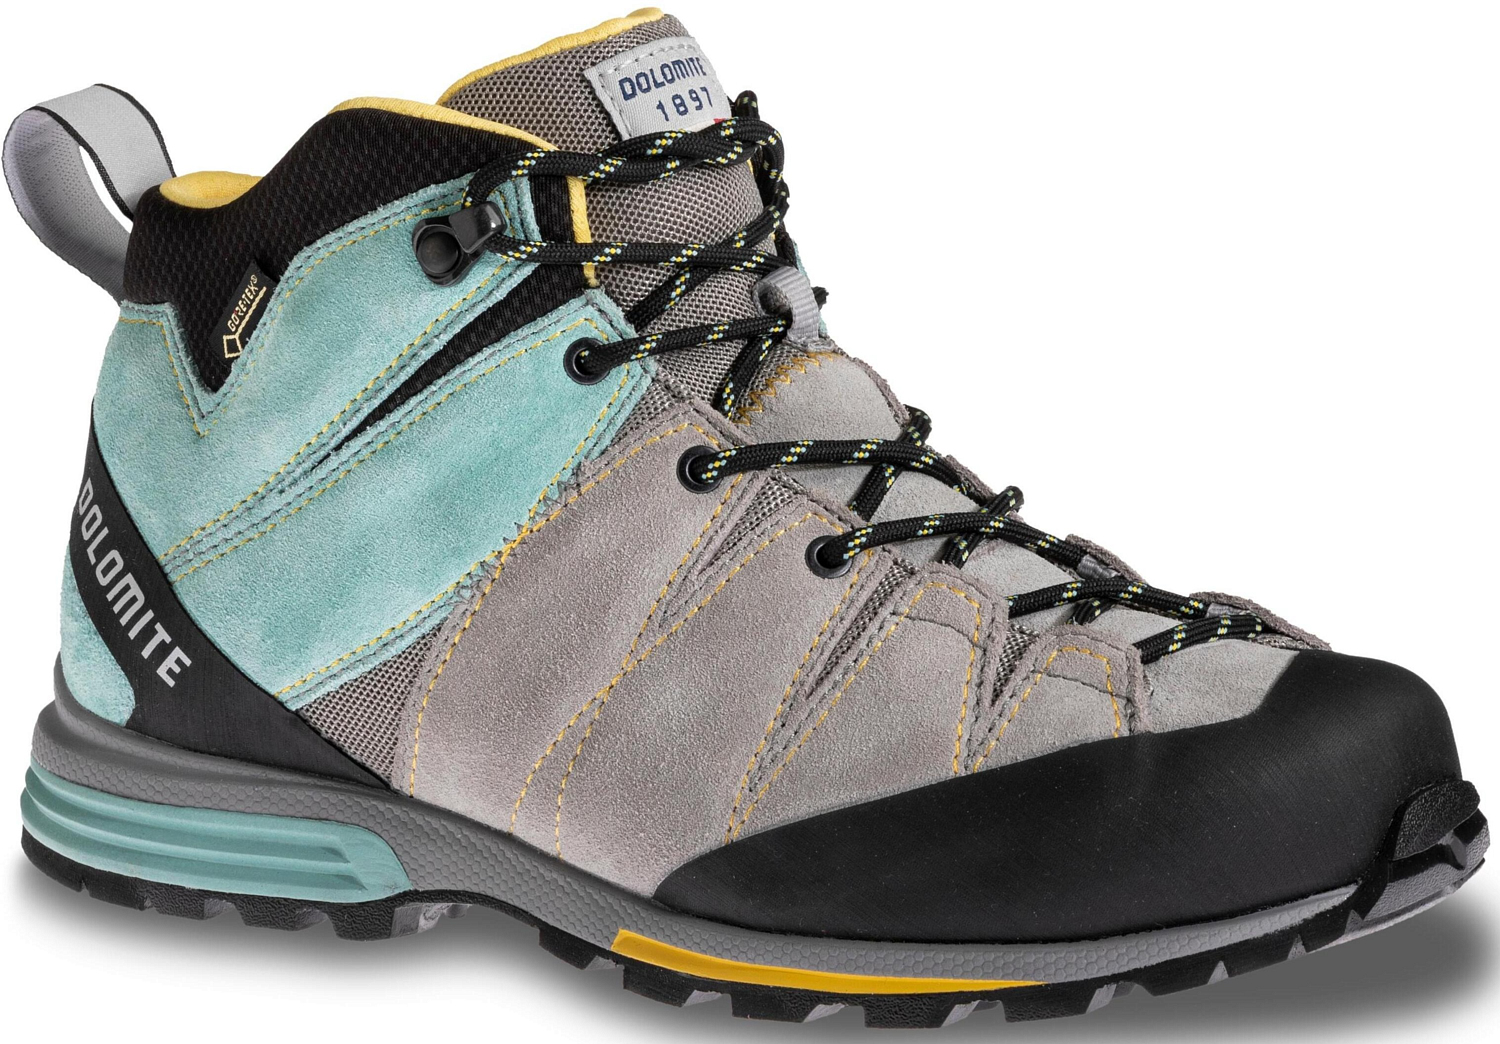 Ботинки Dolomite Diagonal Pro Mid GTX W's Flt G/Agt Gr / серый, бирюзовый